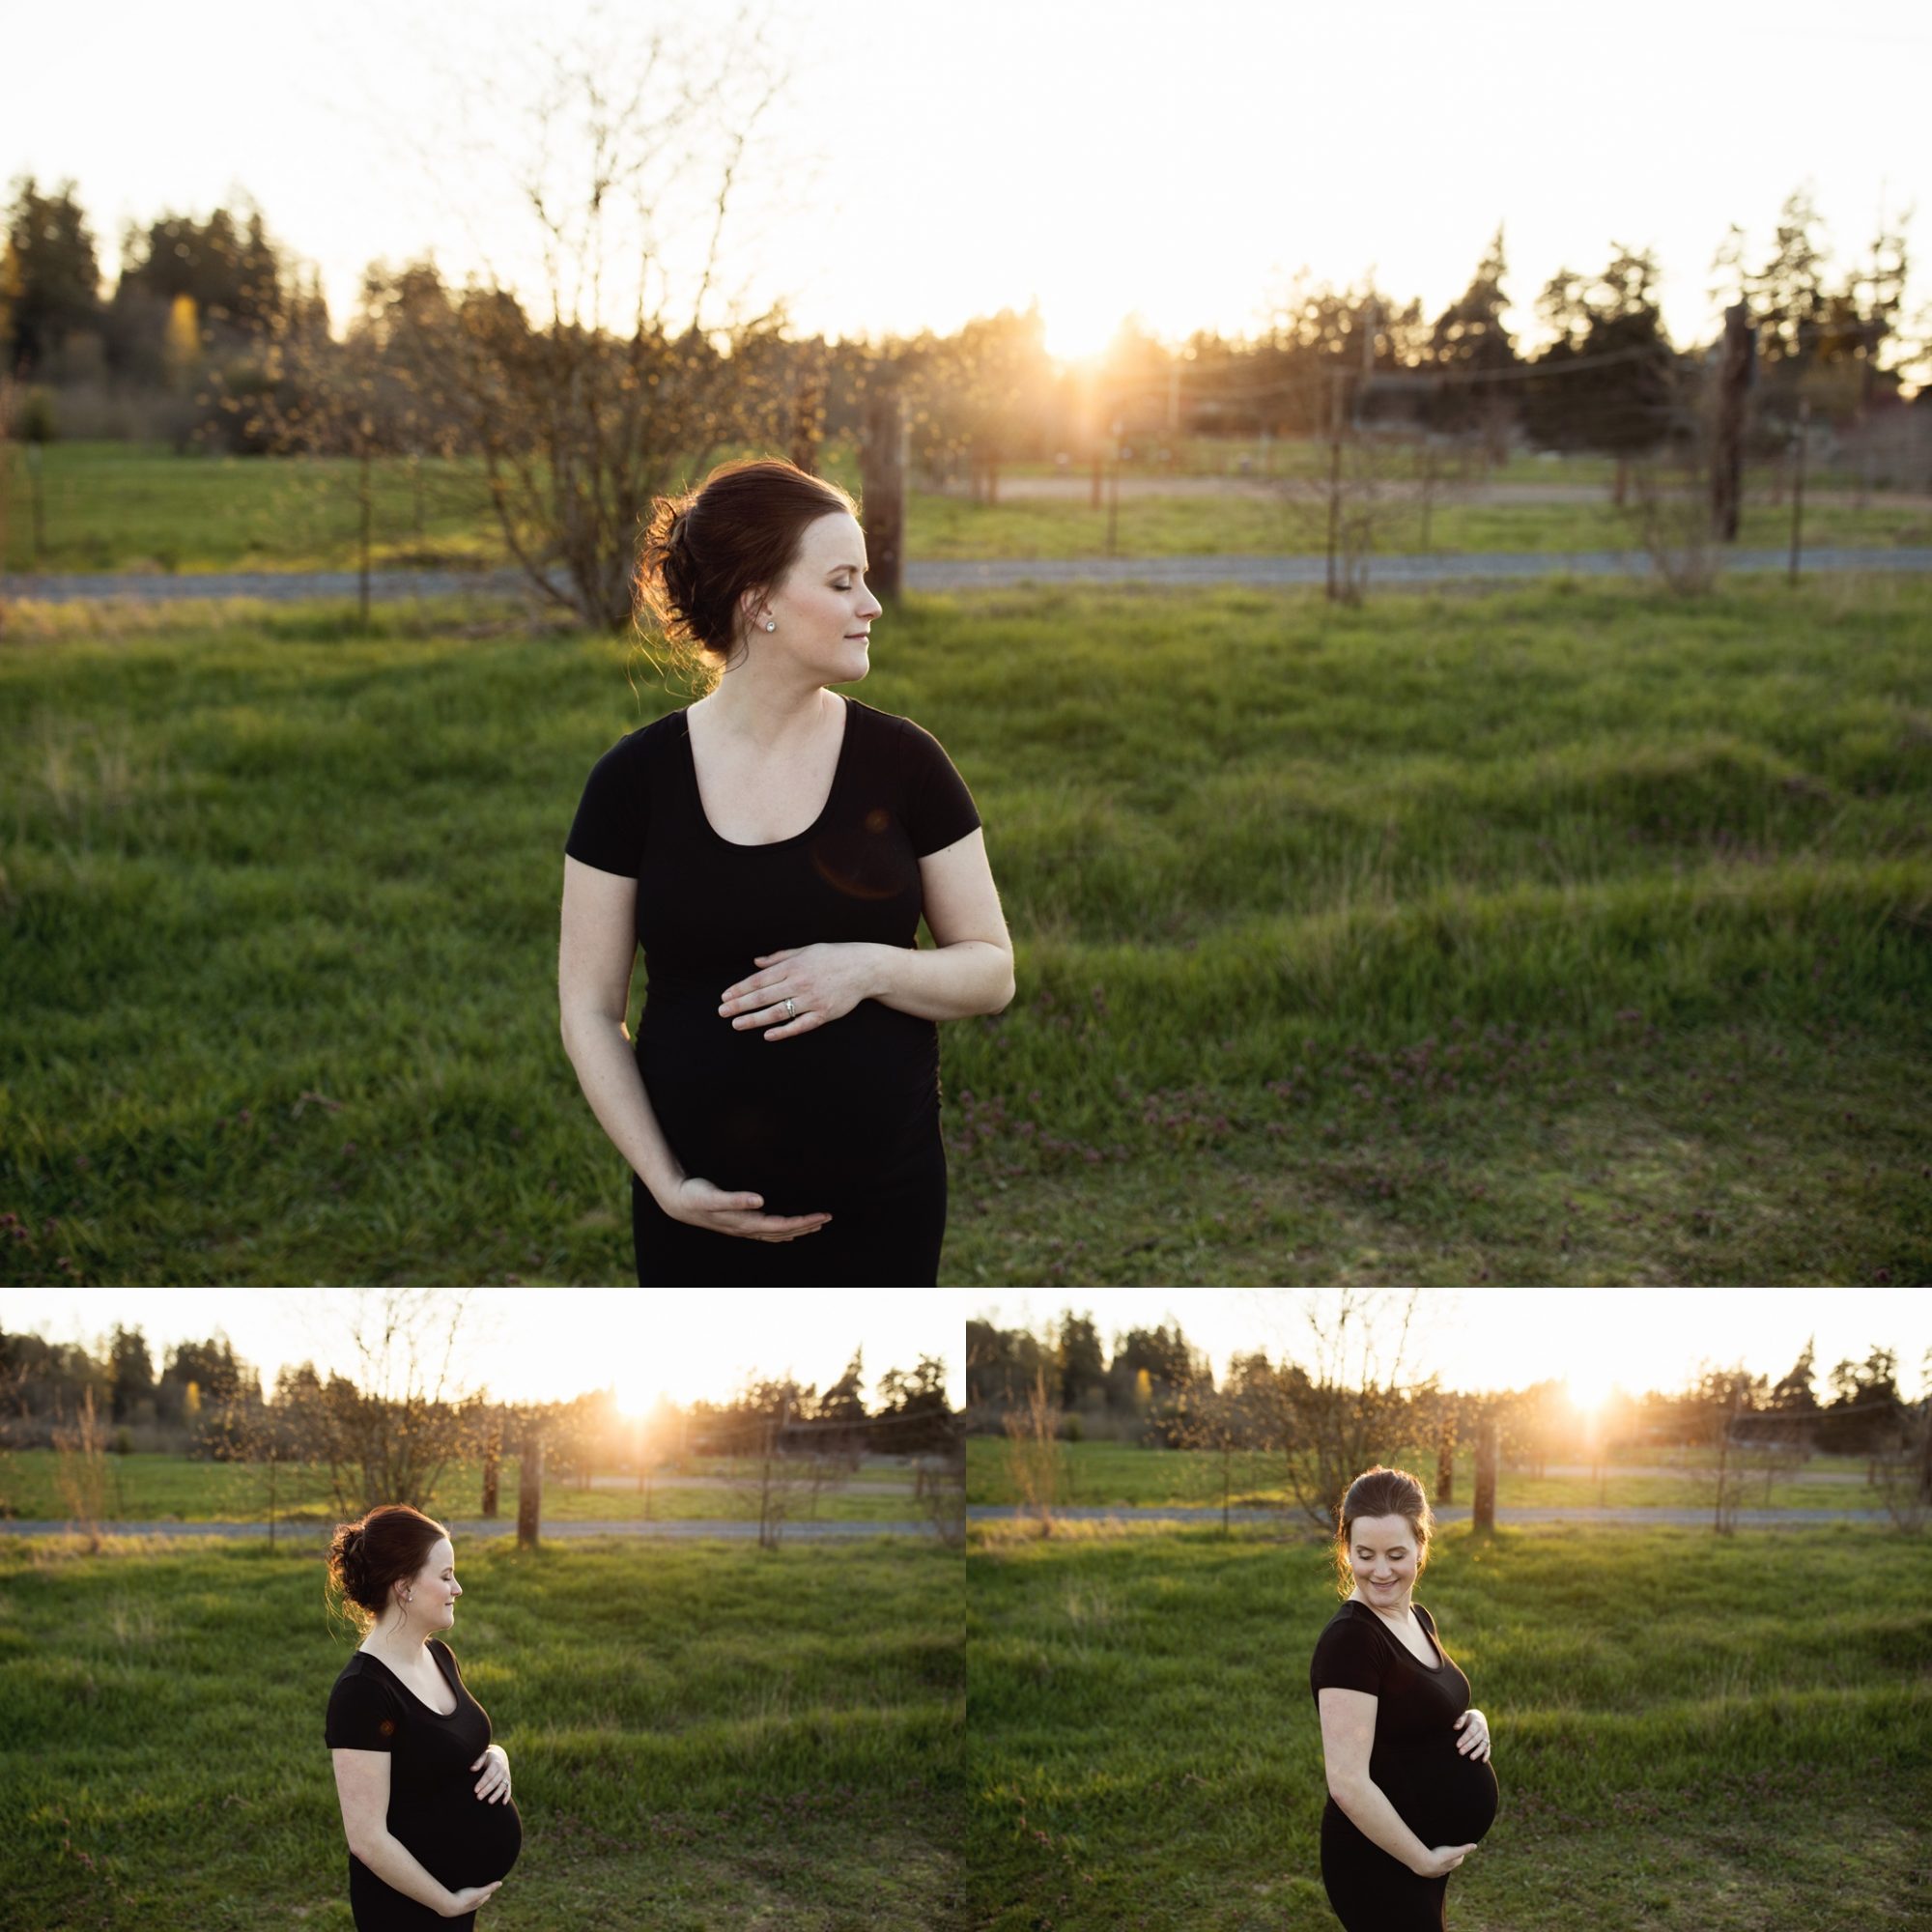 tacoma maternity photographer | puyallup maternity photos